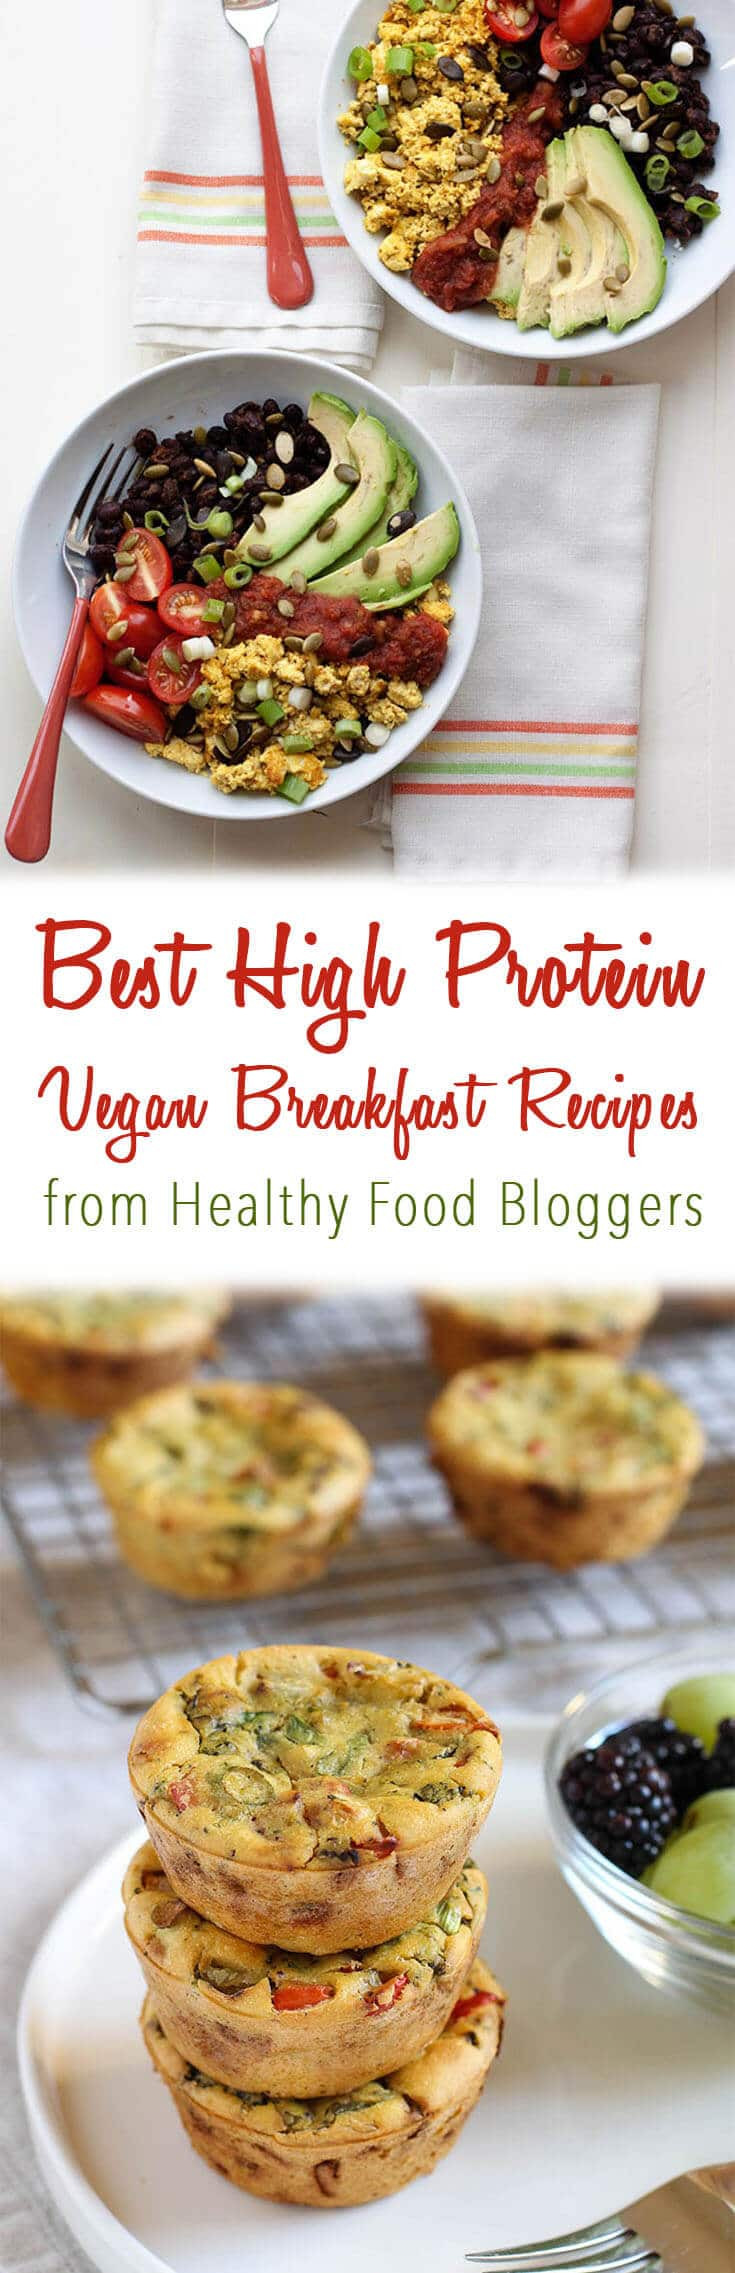 Vegetarian Recipes Breakfast
 Best High Protein Vegan Breakfast Recipes from Healthy